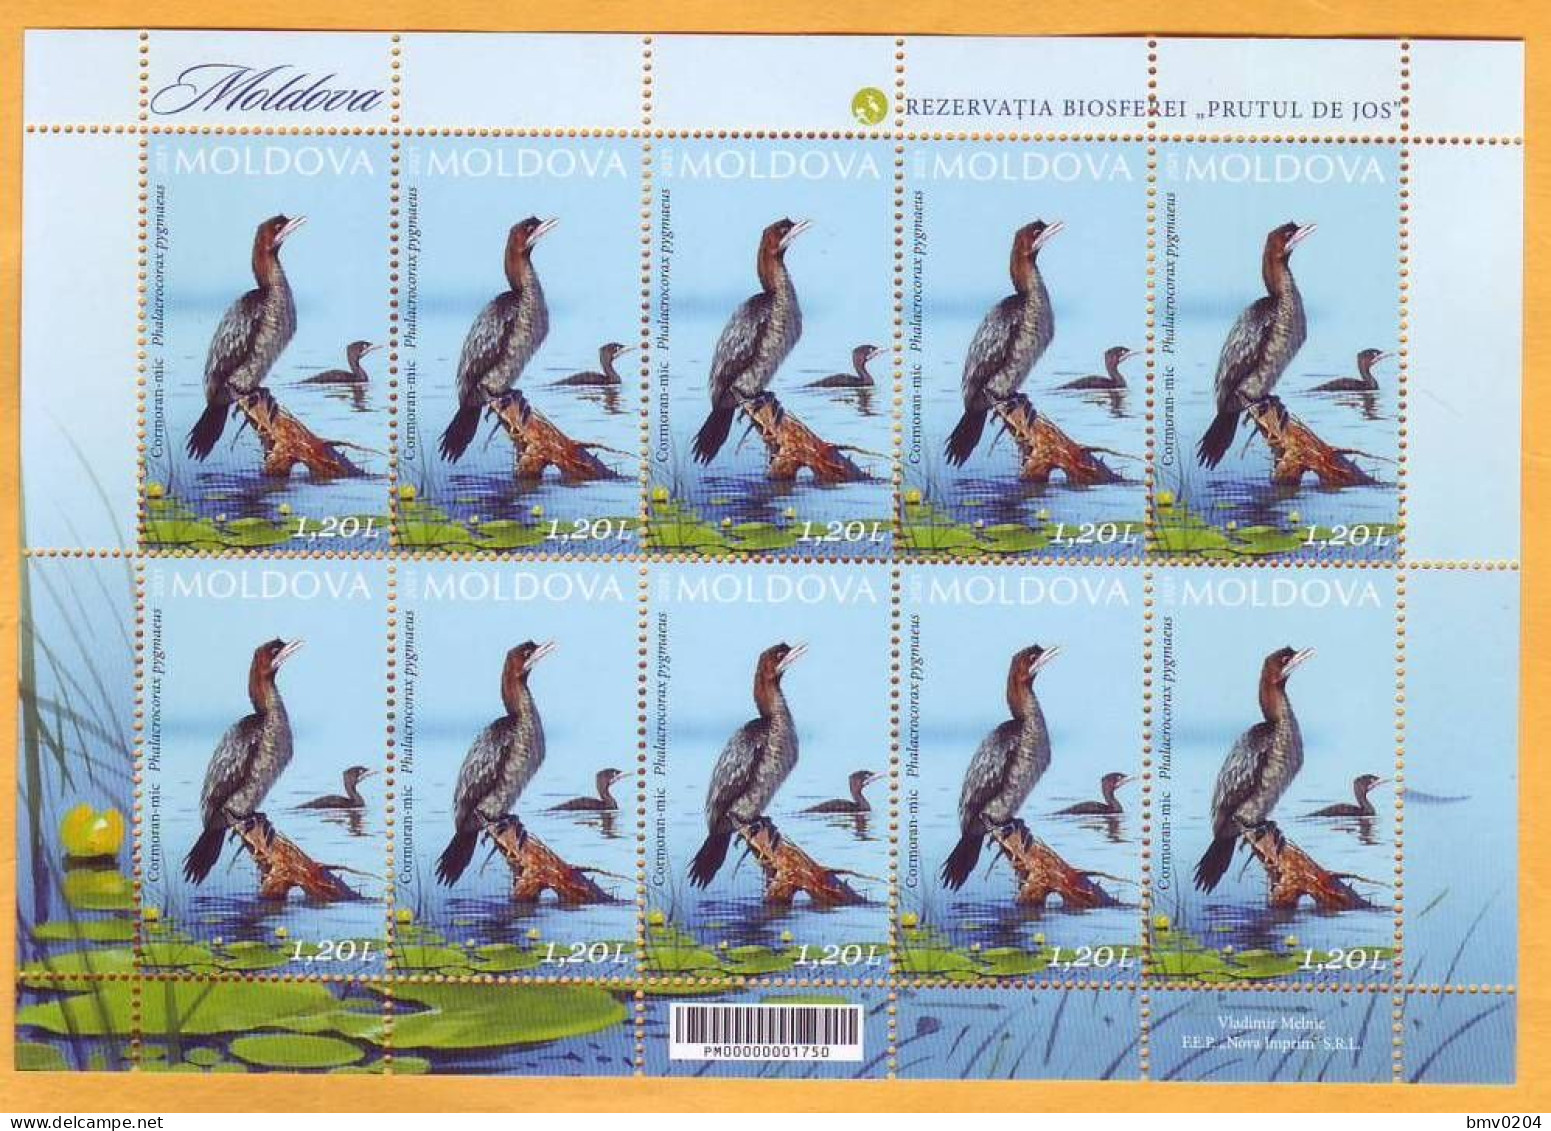 2021 Moldova Moldavie Moldau Romania  Sheet  Lower Prut ”Biosphere Reserve” Birds, Fauna Mint 1.20 - Moldawien (Moldau)